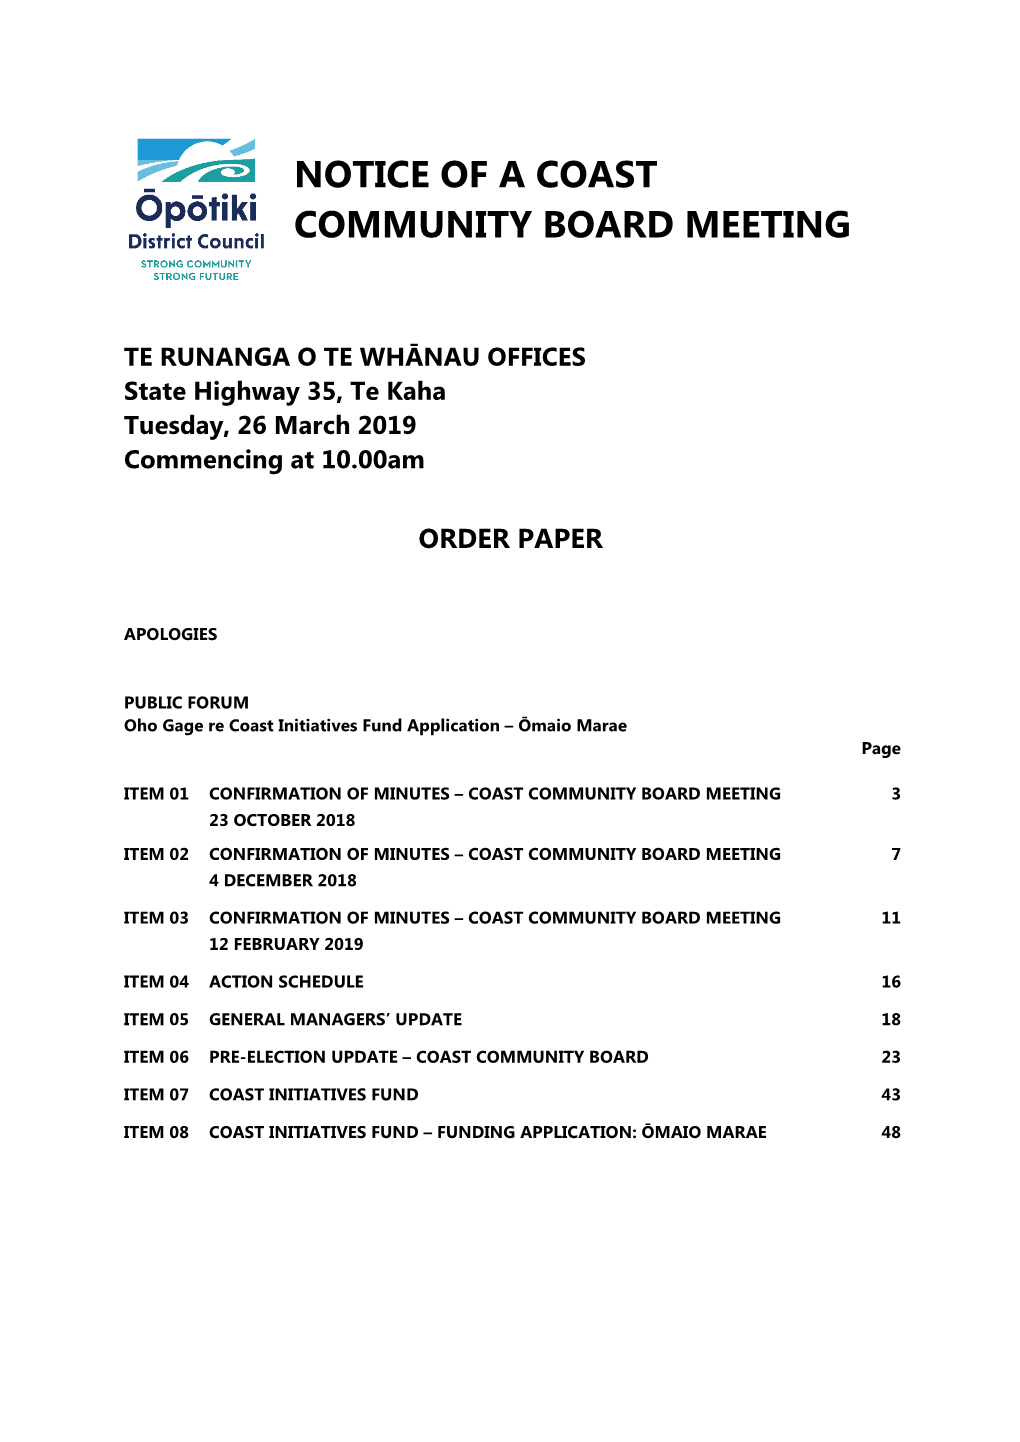 Notice of a Coast Community Board Meeting